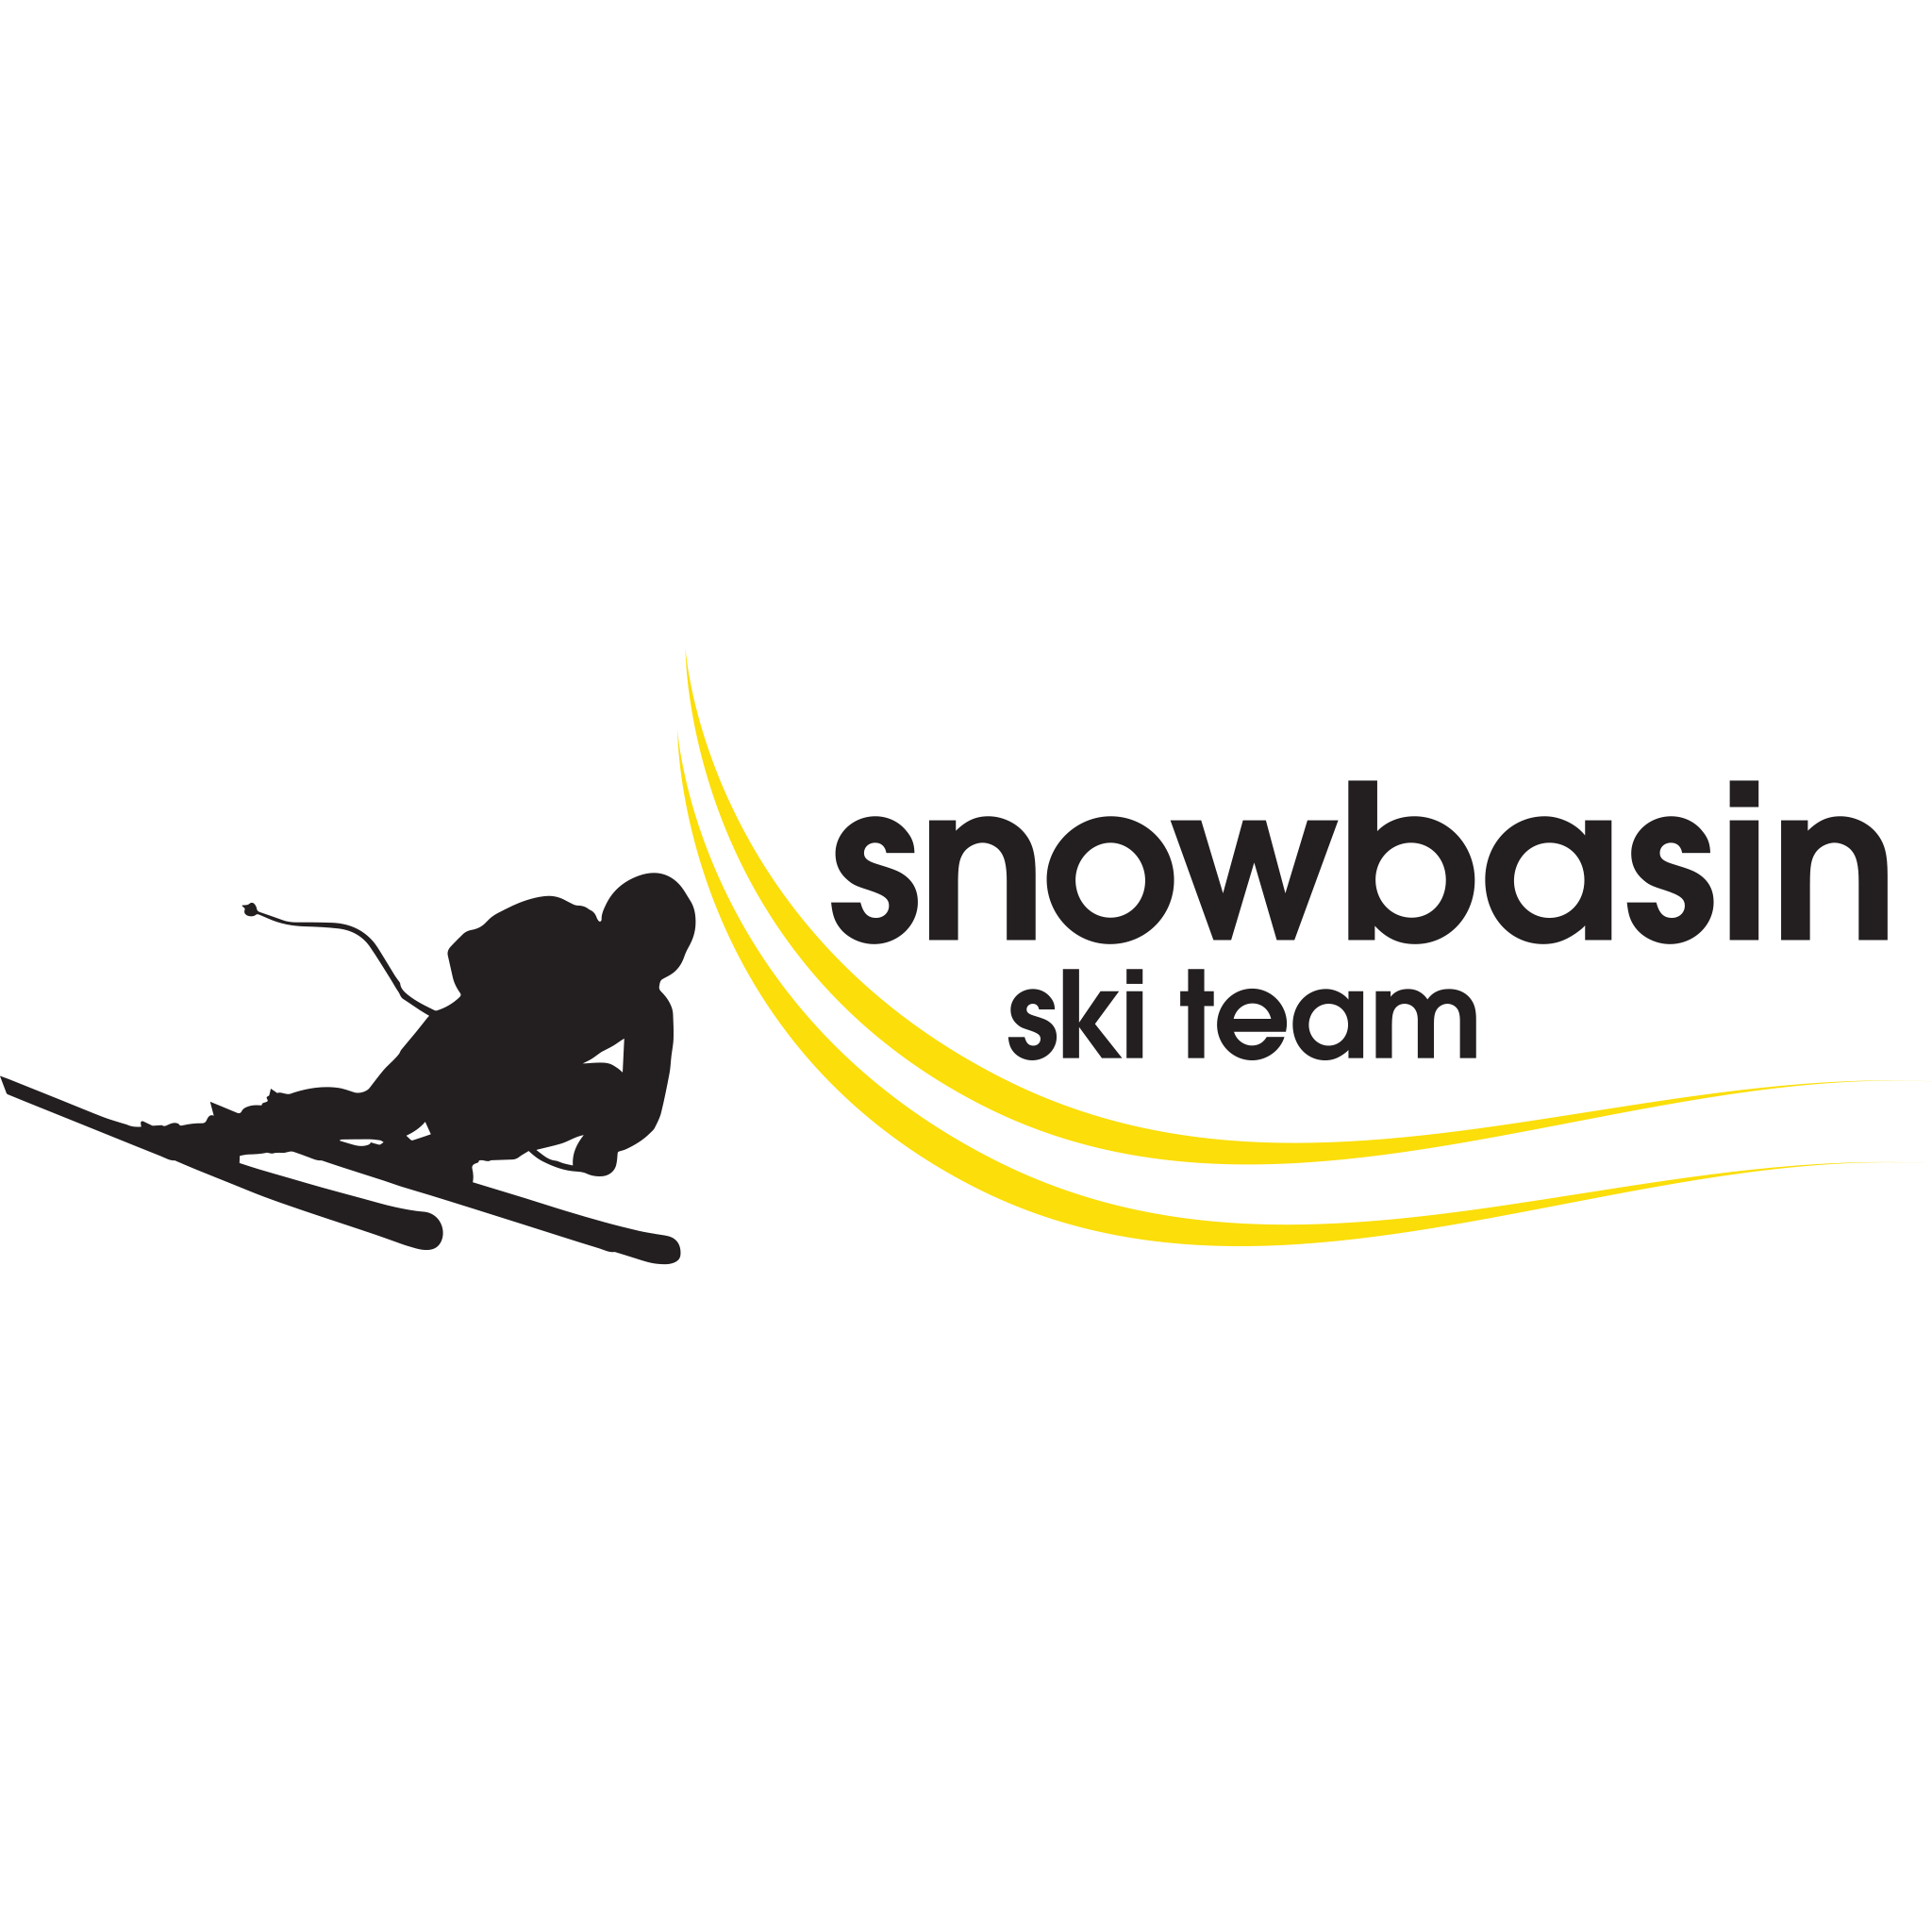 Snowbasin Ski Education Foundation